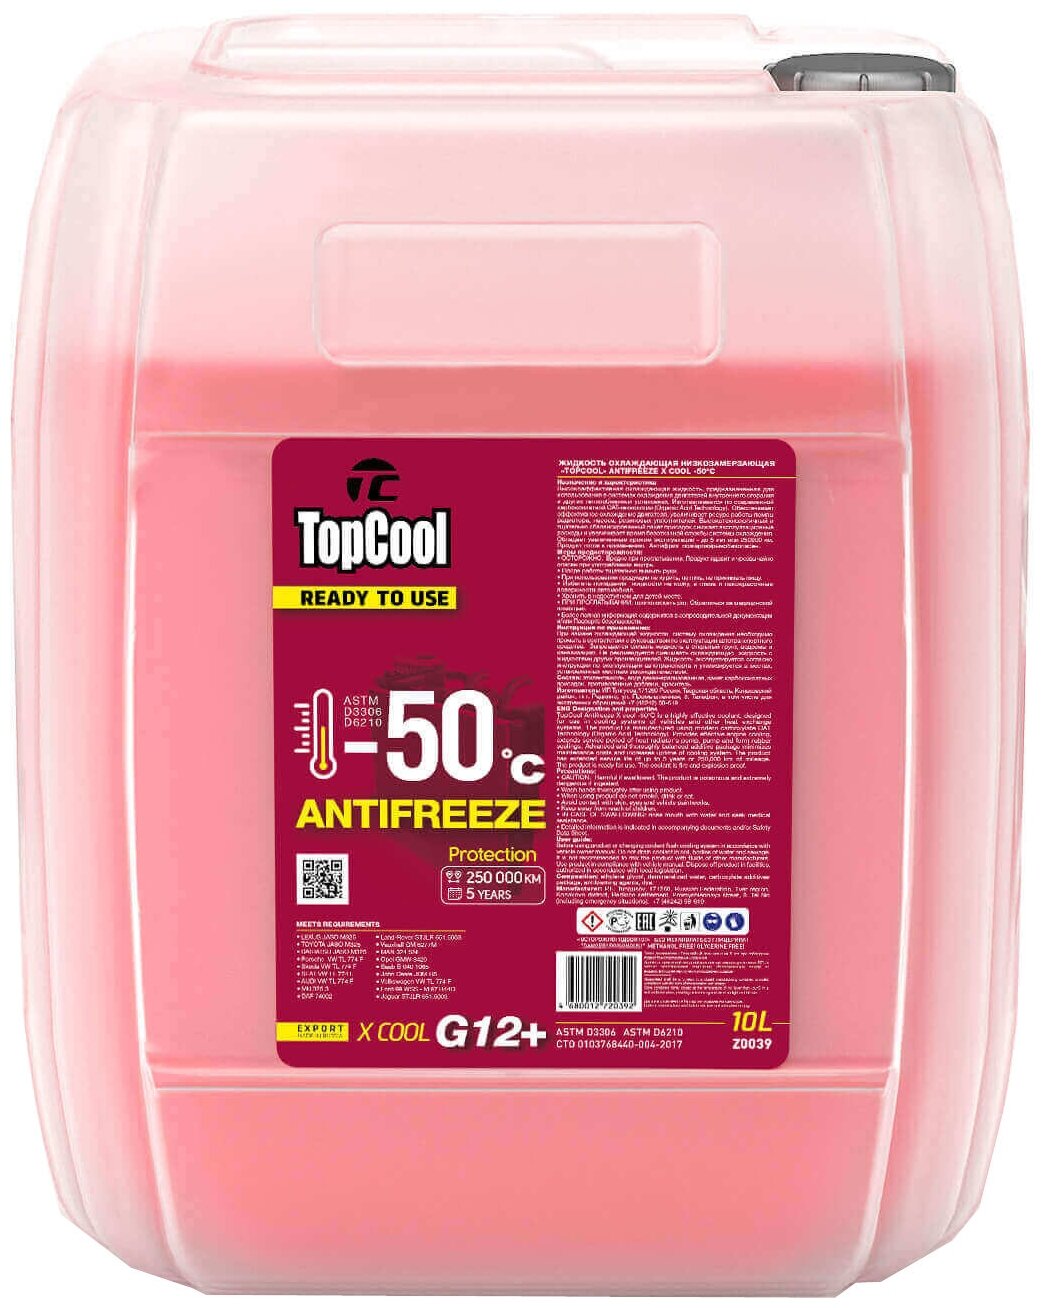 Антифриз Topcool Antifreeze Х Cool G-12+ Red -50°c (10л) Карбоксилатный TOPCOOL арт. Z0039TOPCOOL